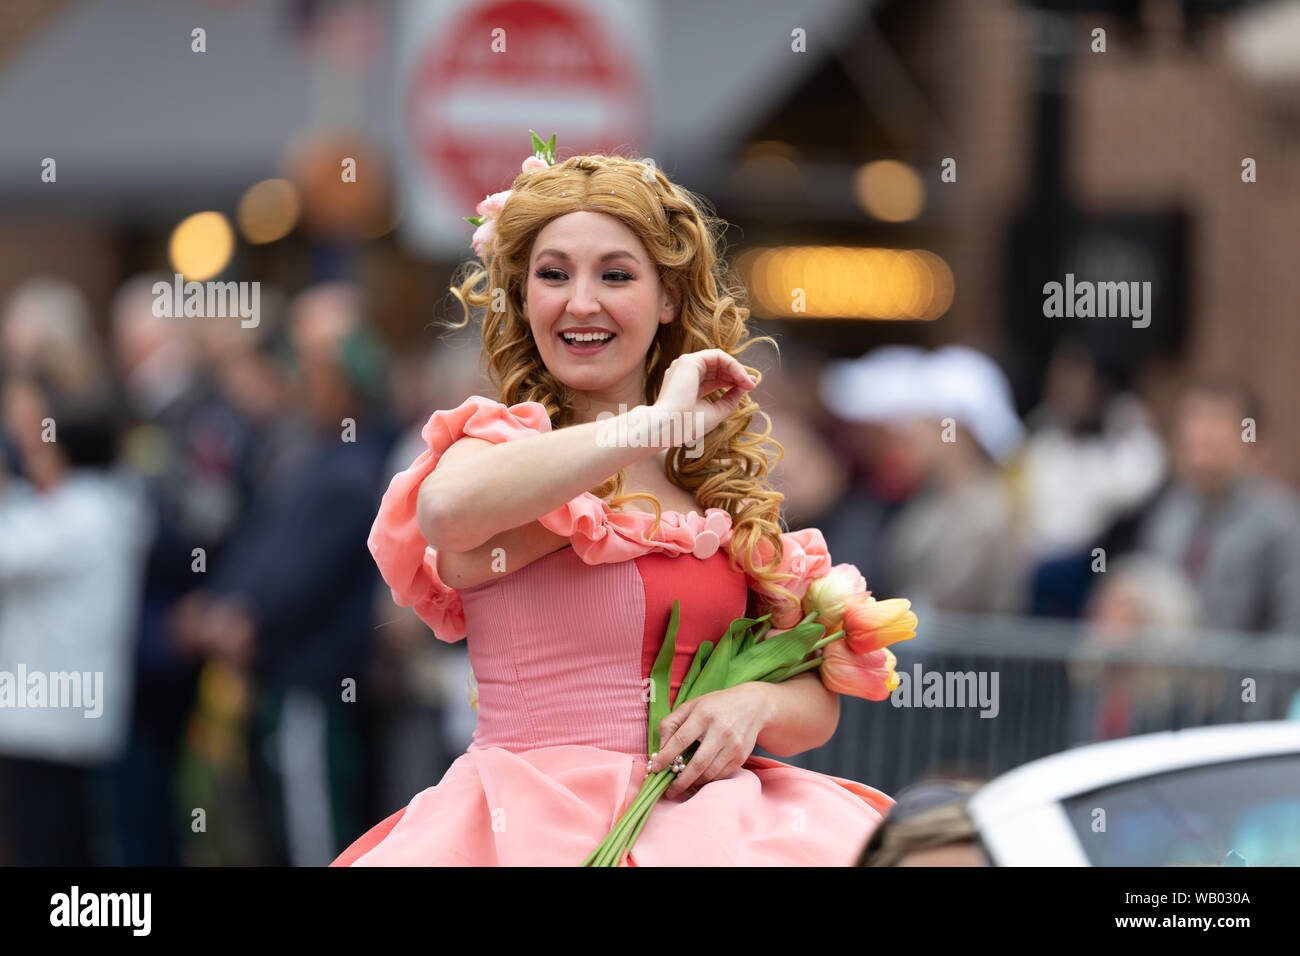 Holland, Michigan, USA - May 11, 2019: Tulip Time Parade, Woman dress up as Disney Character Aurora during the parade Stock Photo